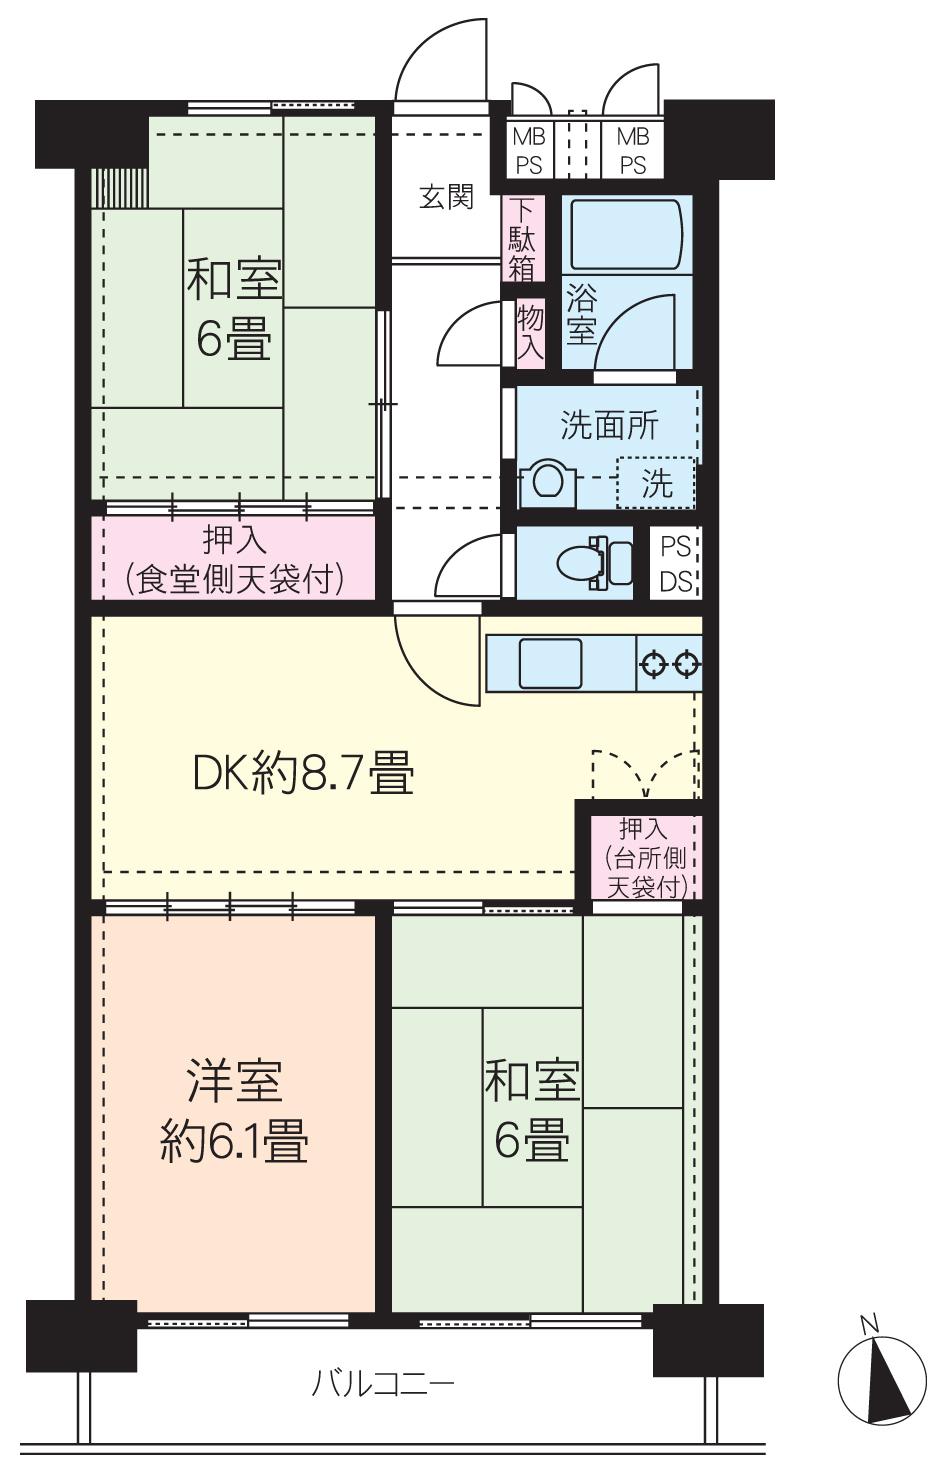 Floor plan. 3DK, Price 12.8 million yen, Occupied area 63.12 sq m , Balcony area 7.12 sq m